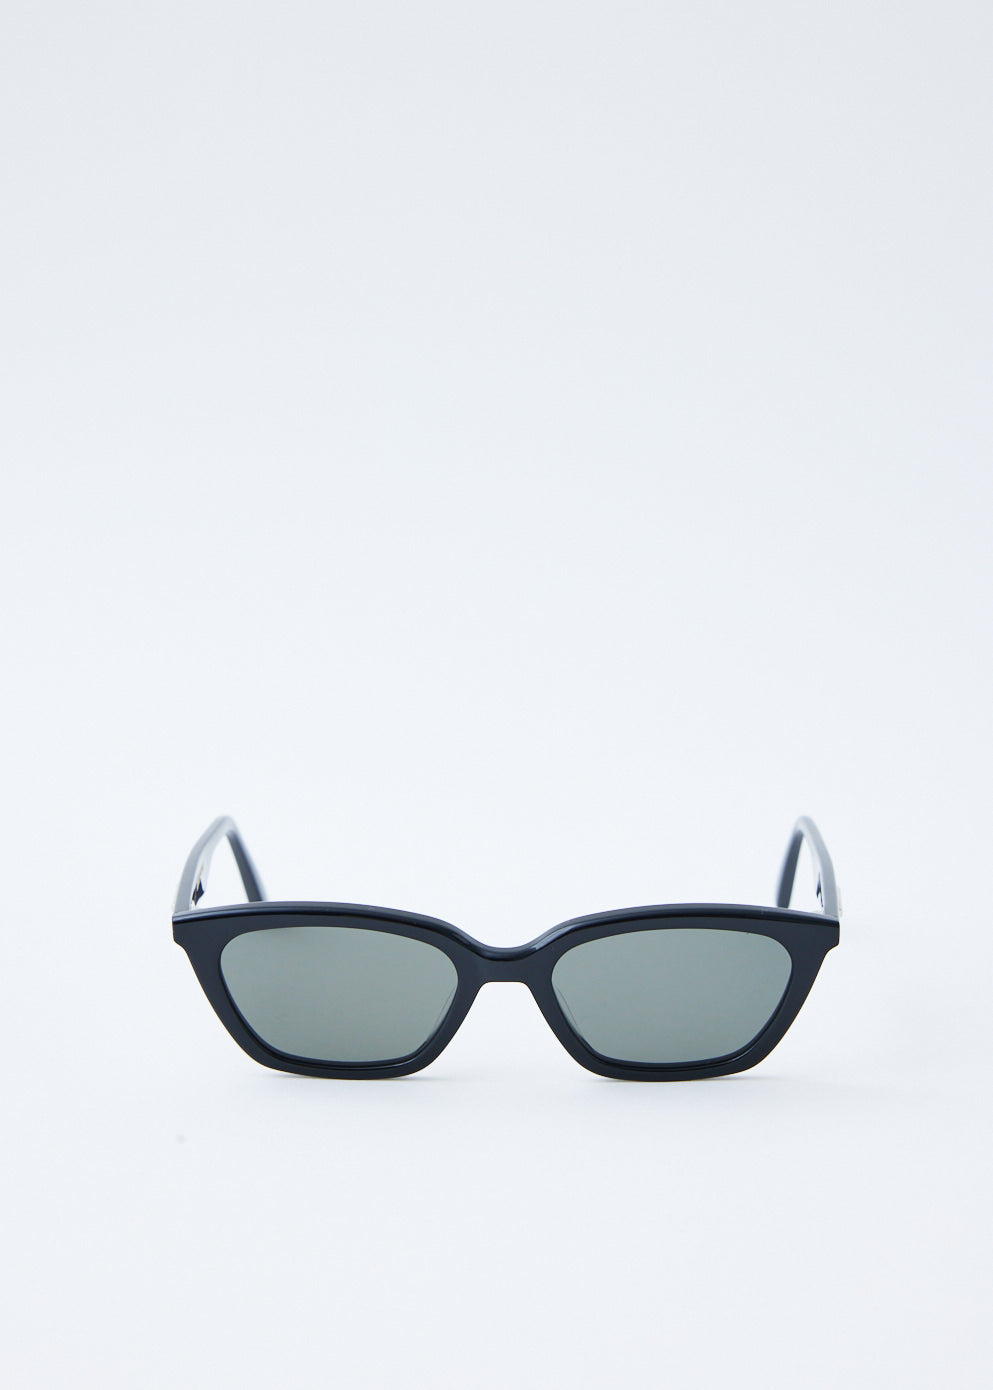 LOTI-01 Sunglasses